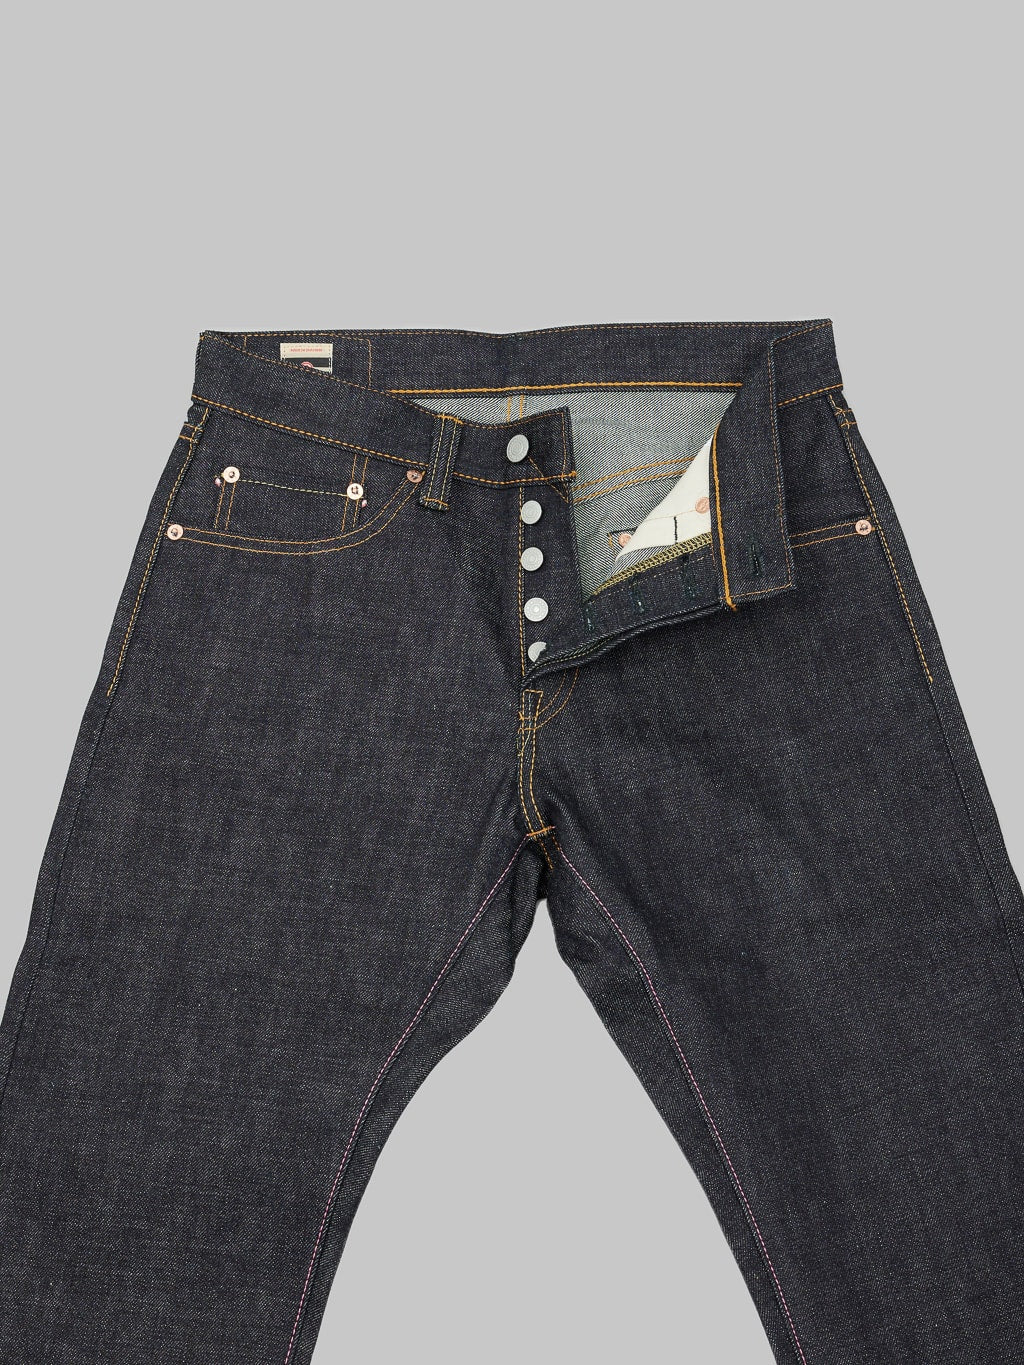 Momotaro 0306 V Tight Tapered Jeans high waist